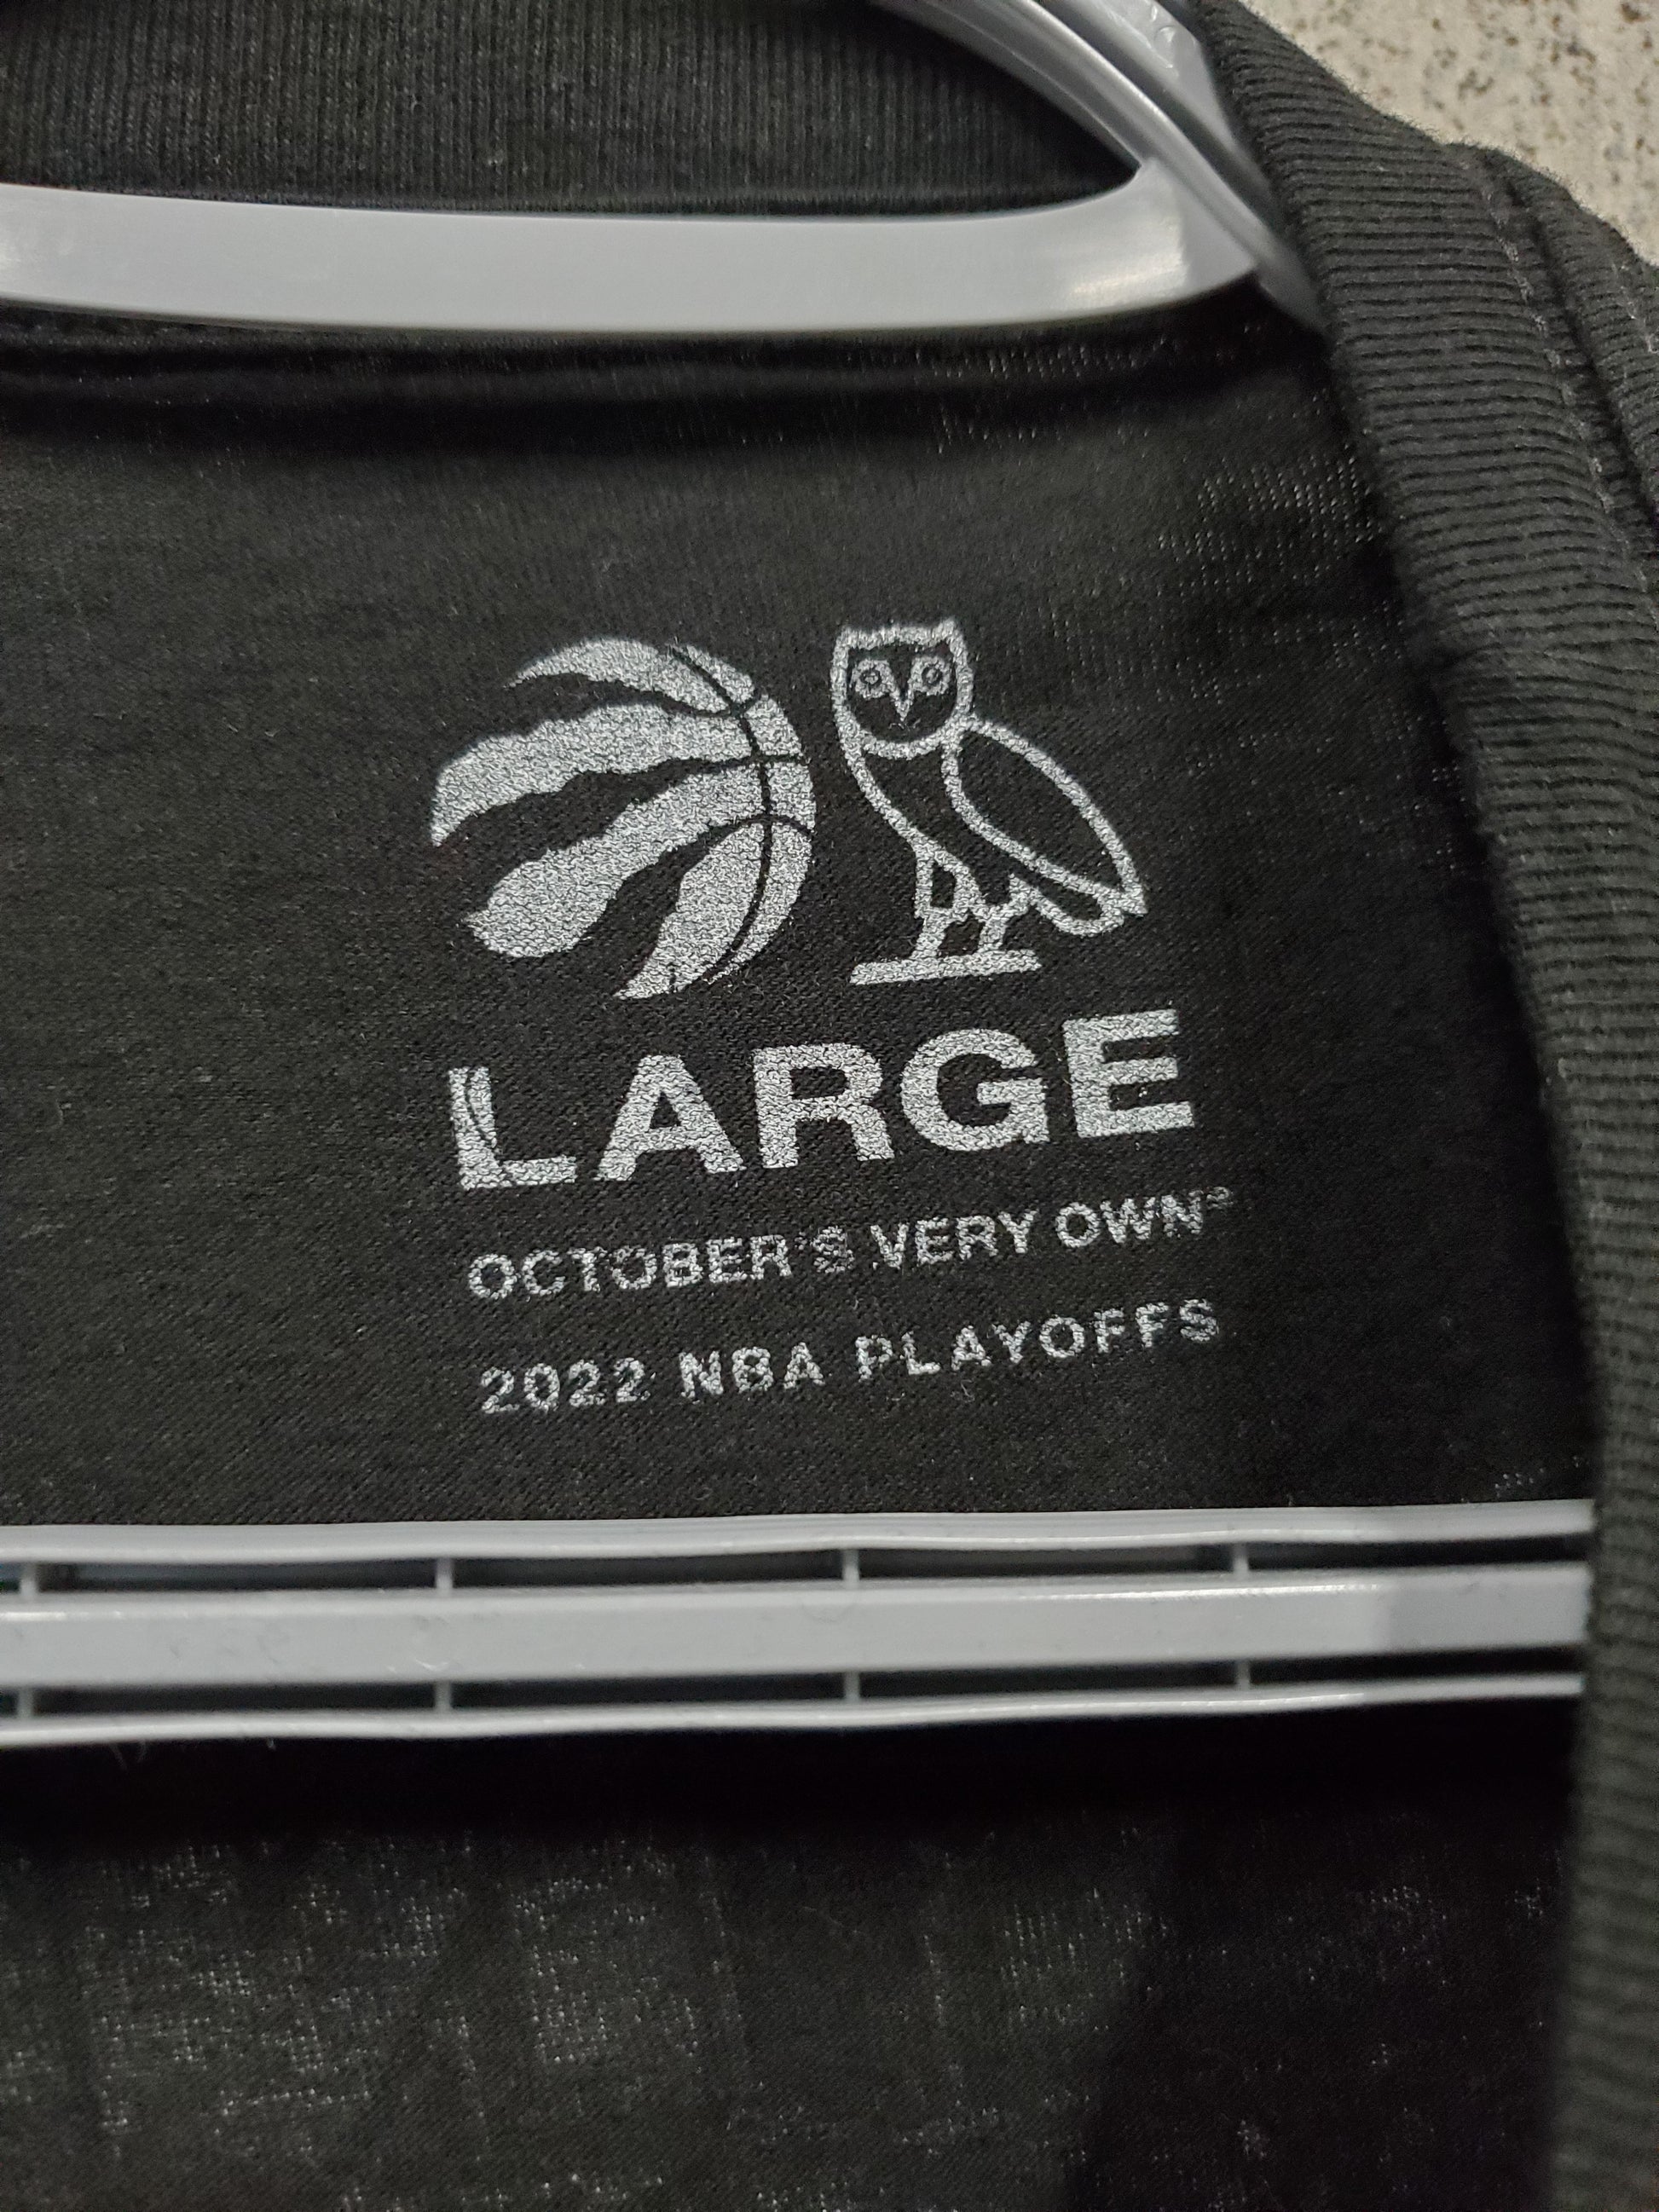 Raptors OVO 2022 Playoffs long sleeve T-shirt size XL